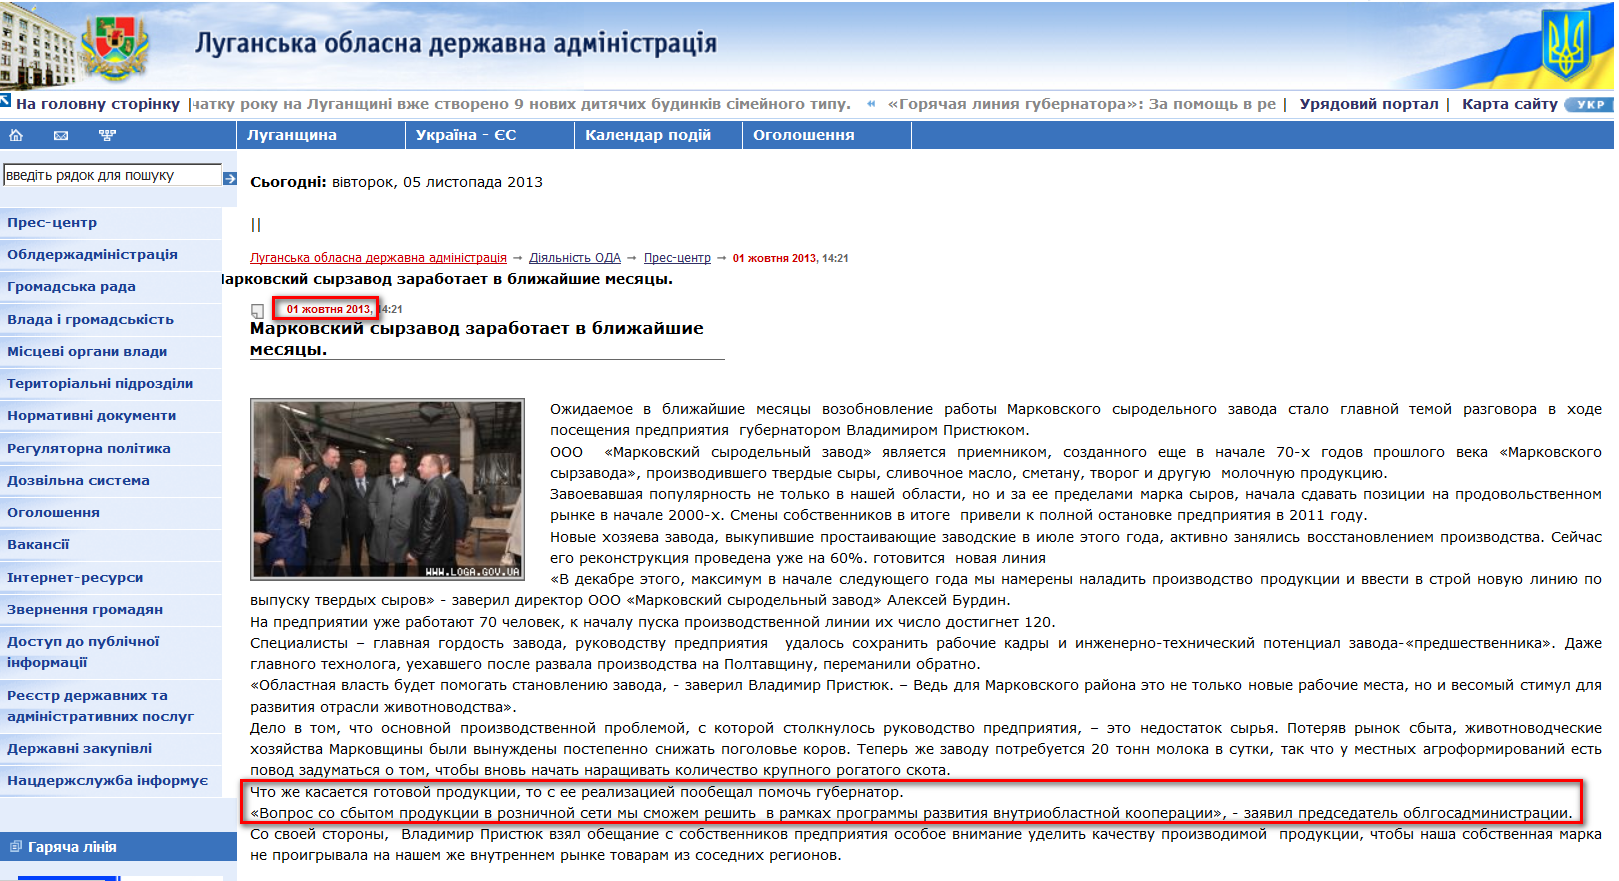 http://www.loga.gov.ua/oda/press/news/2013/10/01/news_57527.html